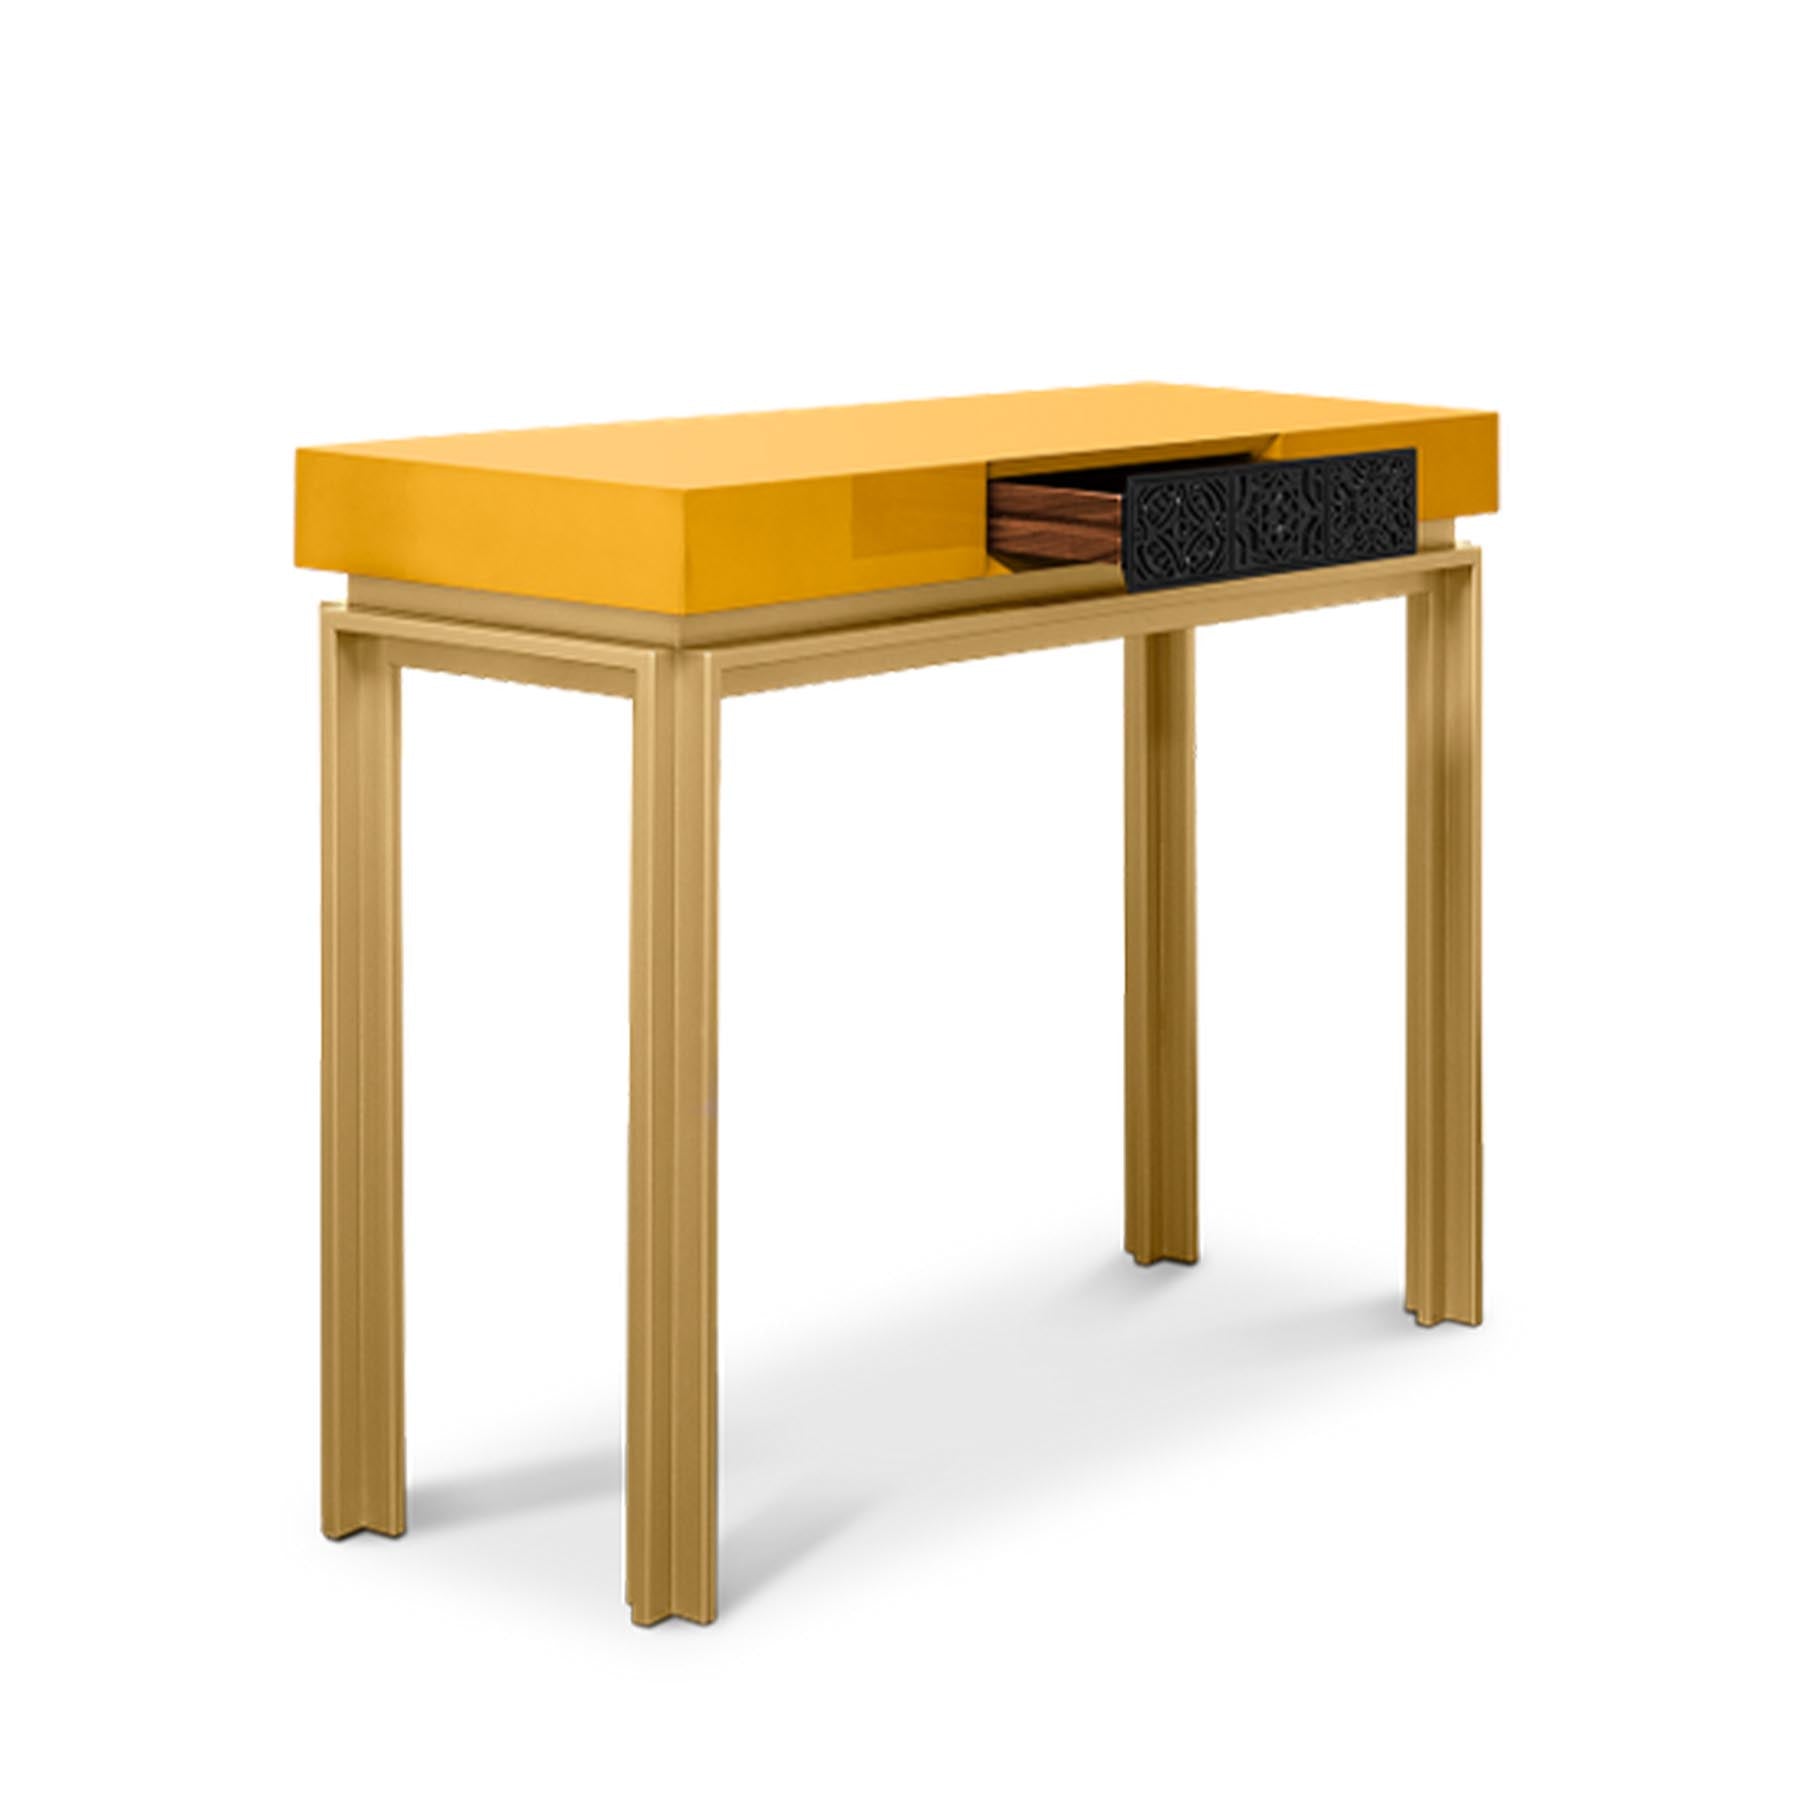 VIRTUOSO III - CONSOLE | Modern Furniture + Decor